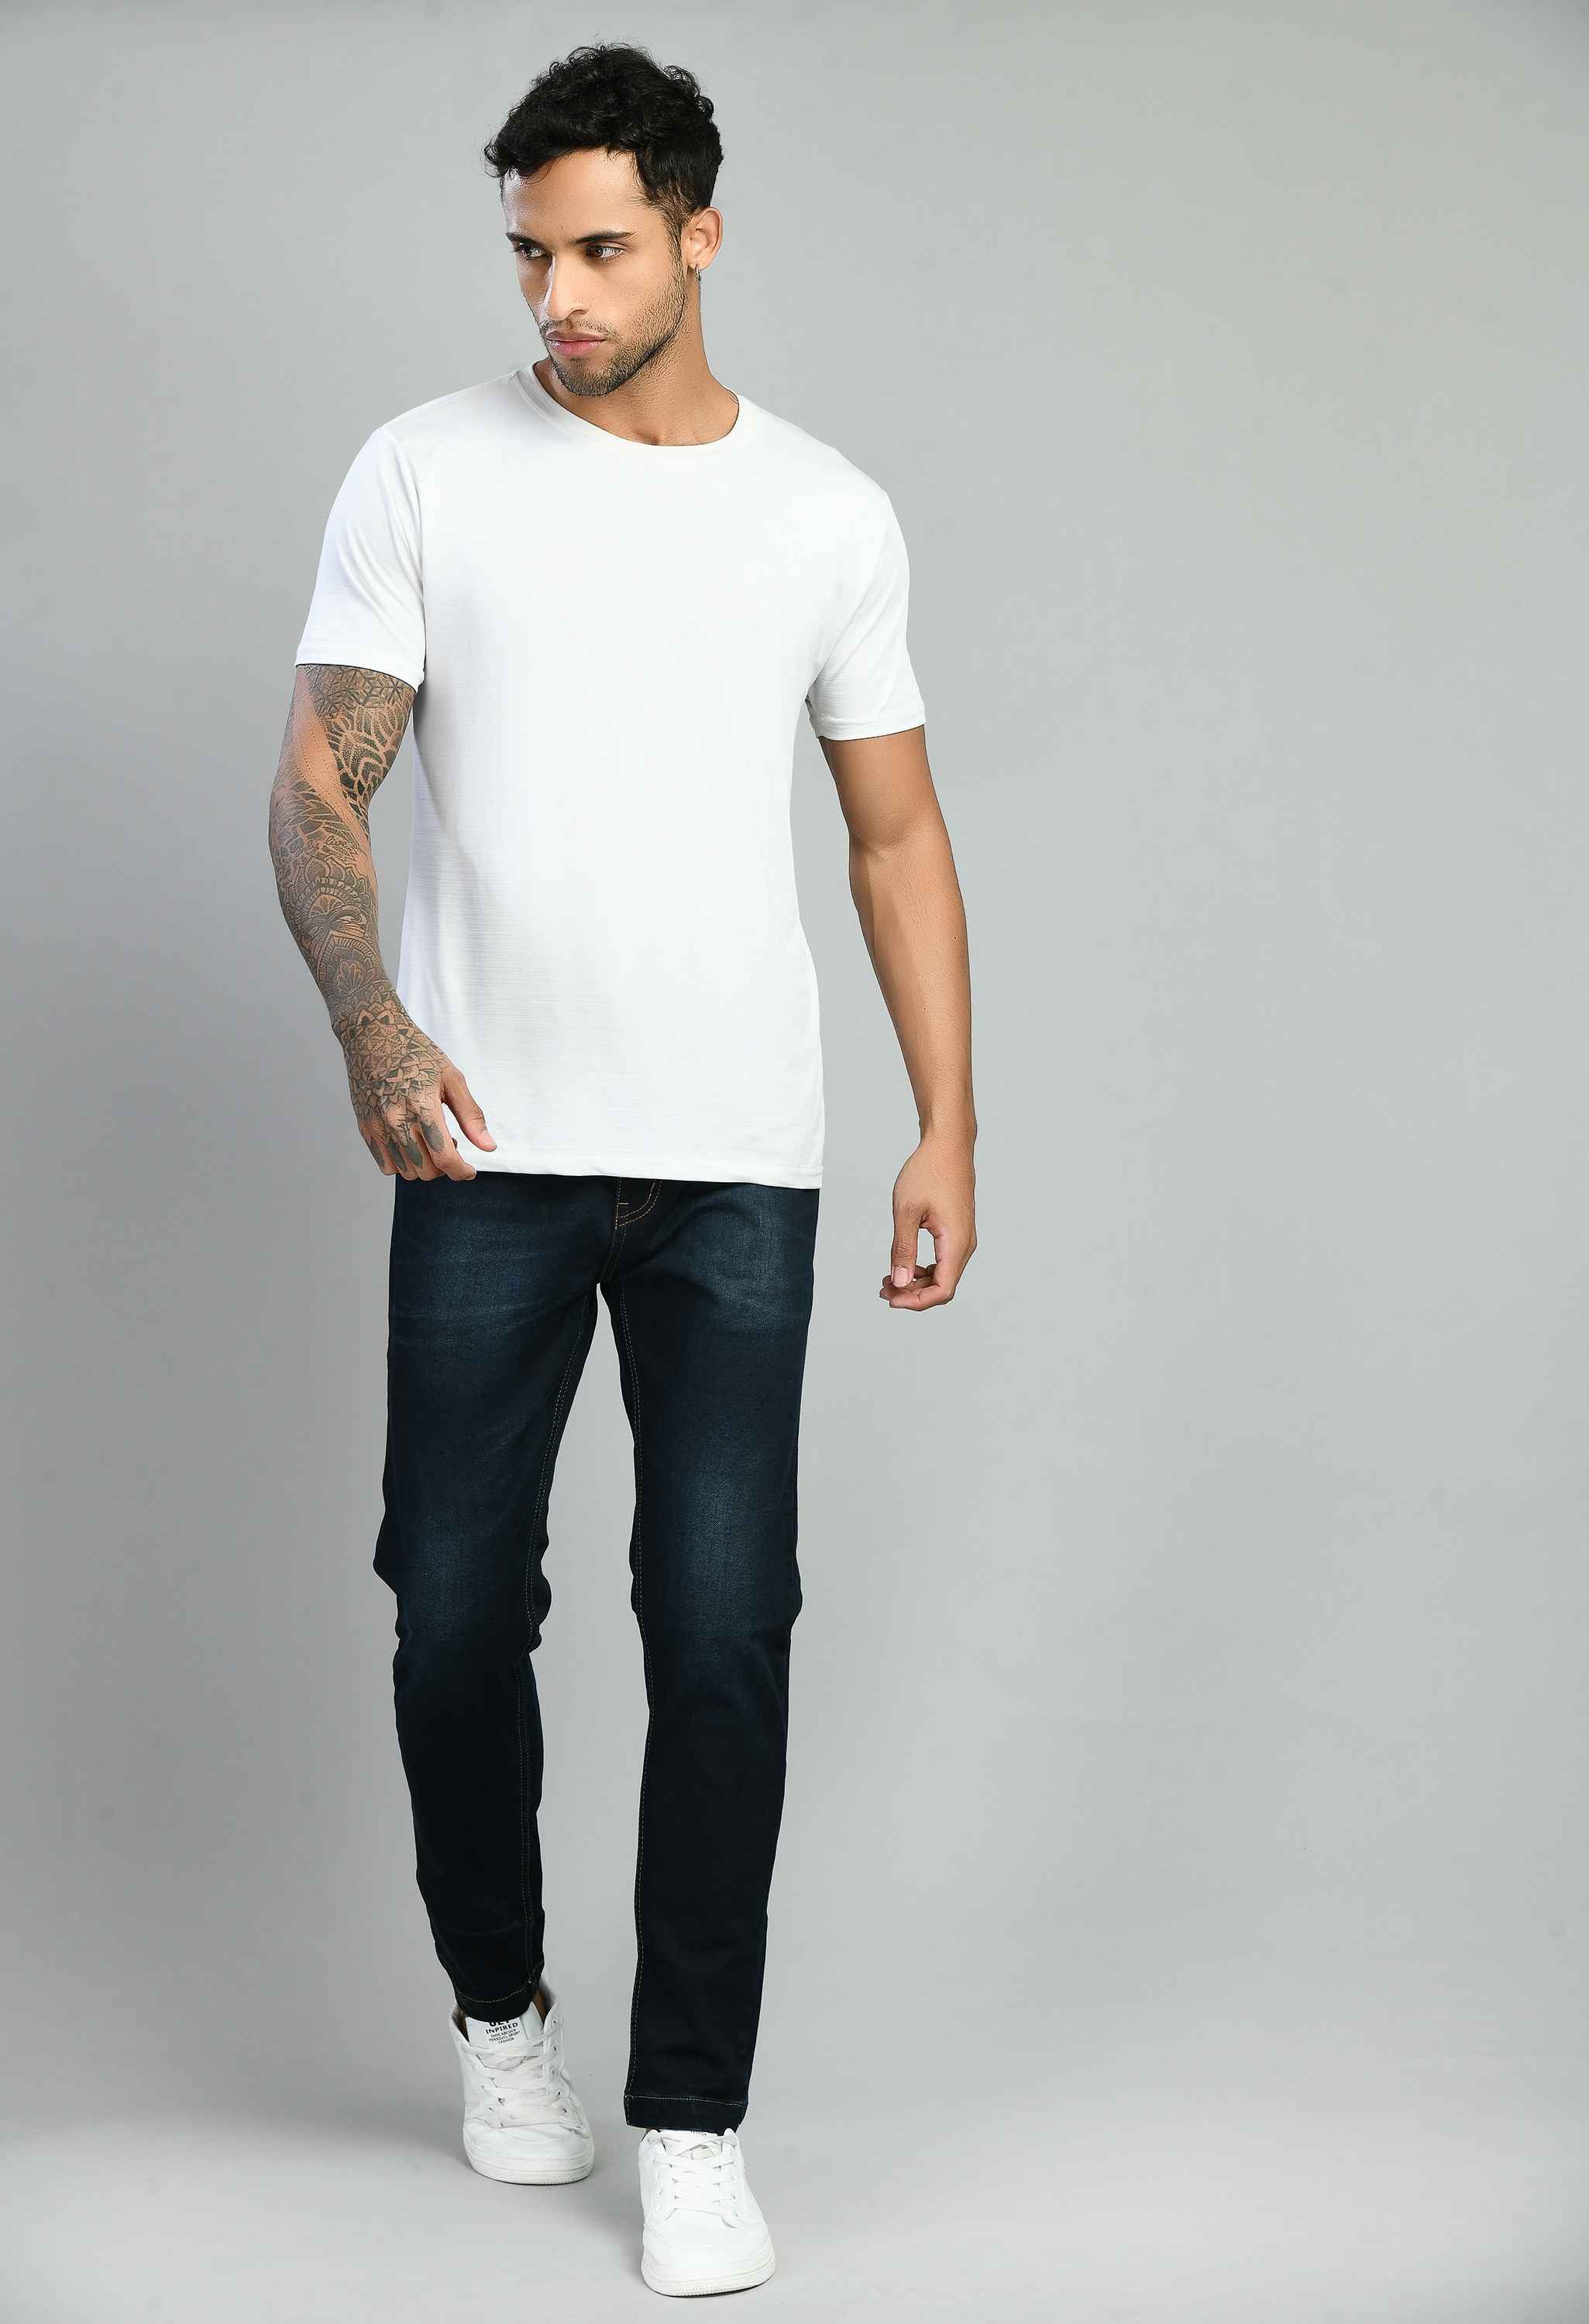 Denim Lycra Mid Rise Slim Fit Jeans